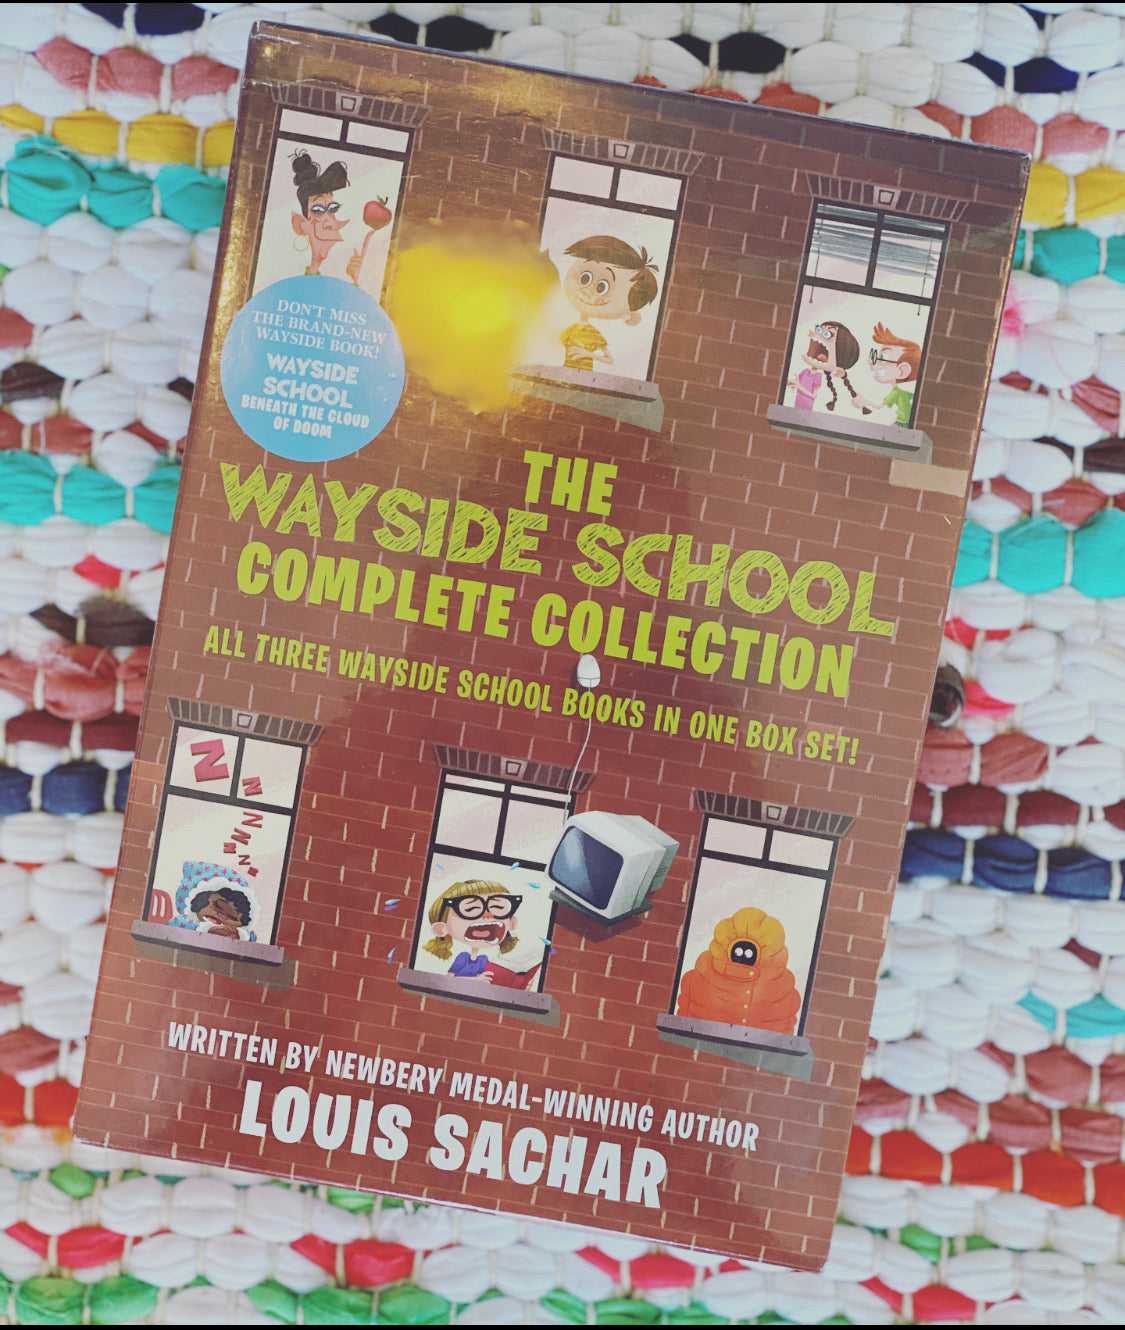 Wayside School Gets A Little Stranger by Louis Sachar